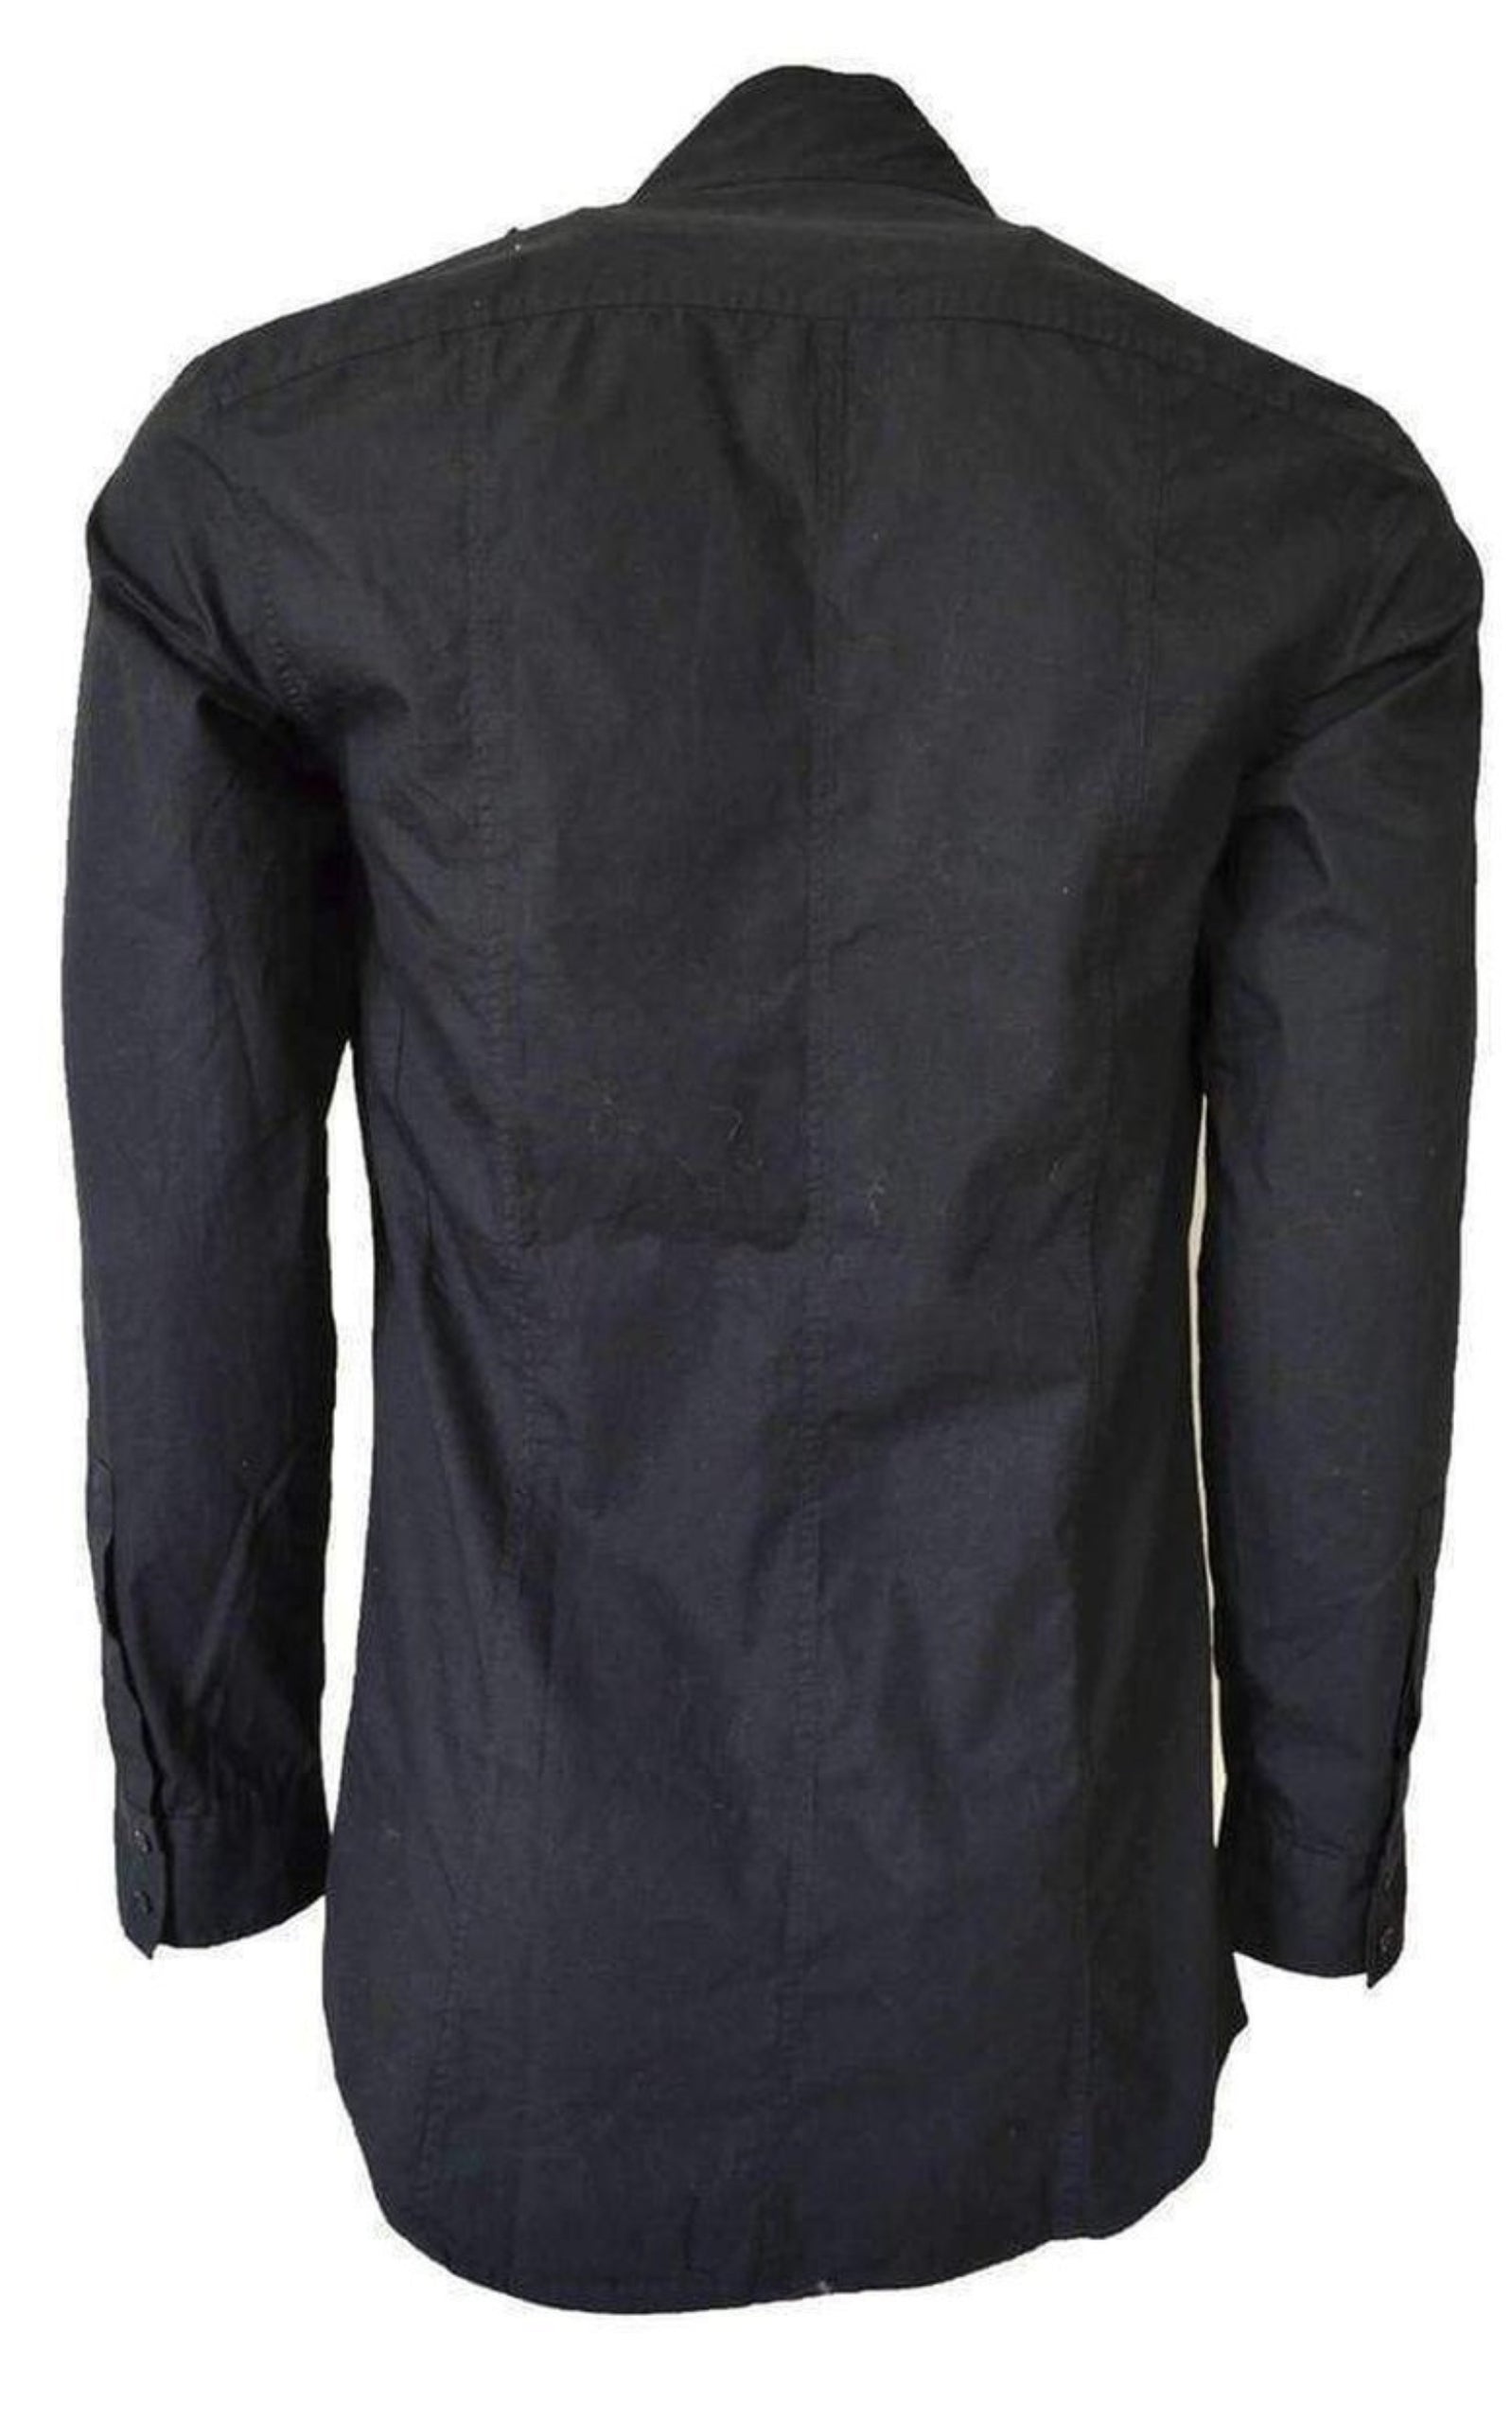 Black Shirt Double-breasted Jacket - 2